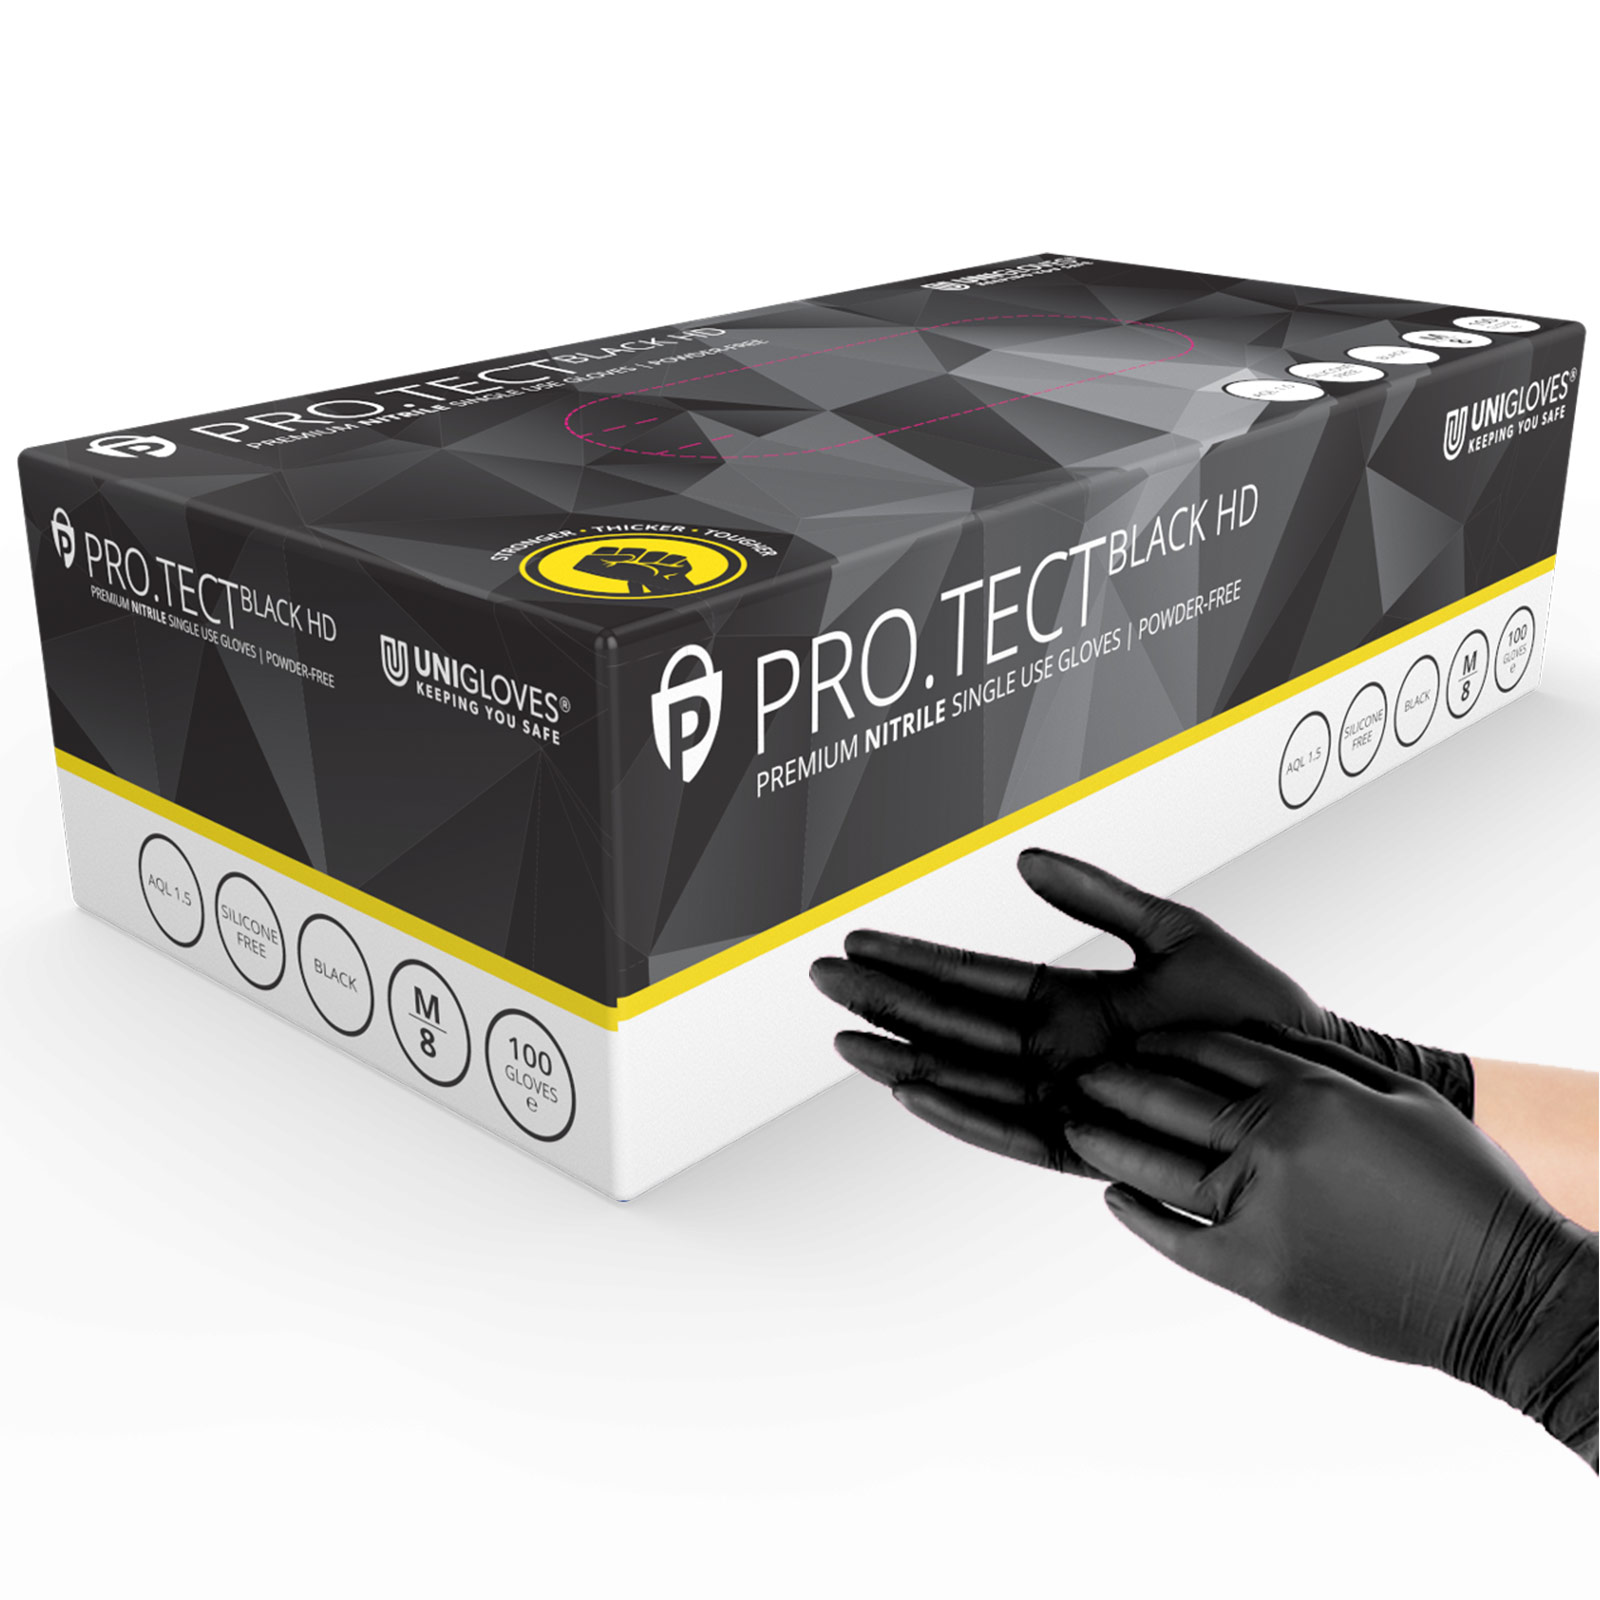 Unigloves PRO.TECT Black HD - Heavy Duty Disposable Nitrile Gloves ...